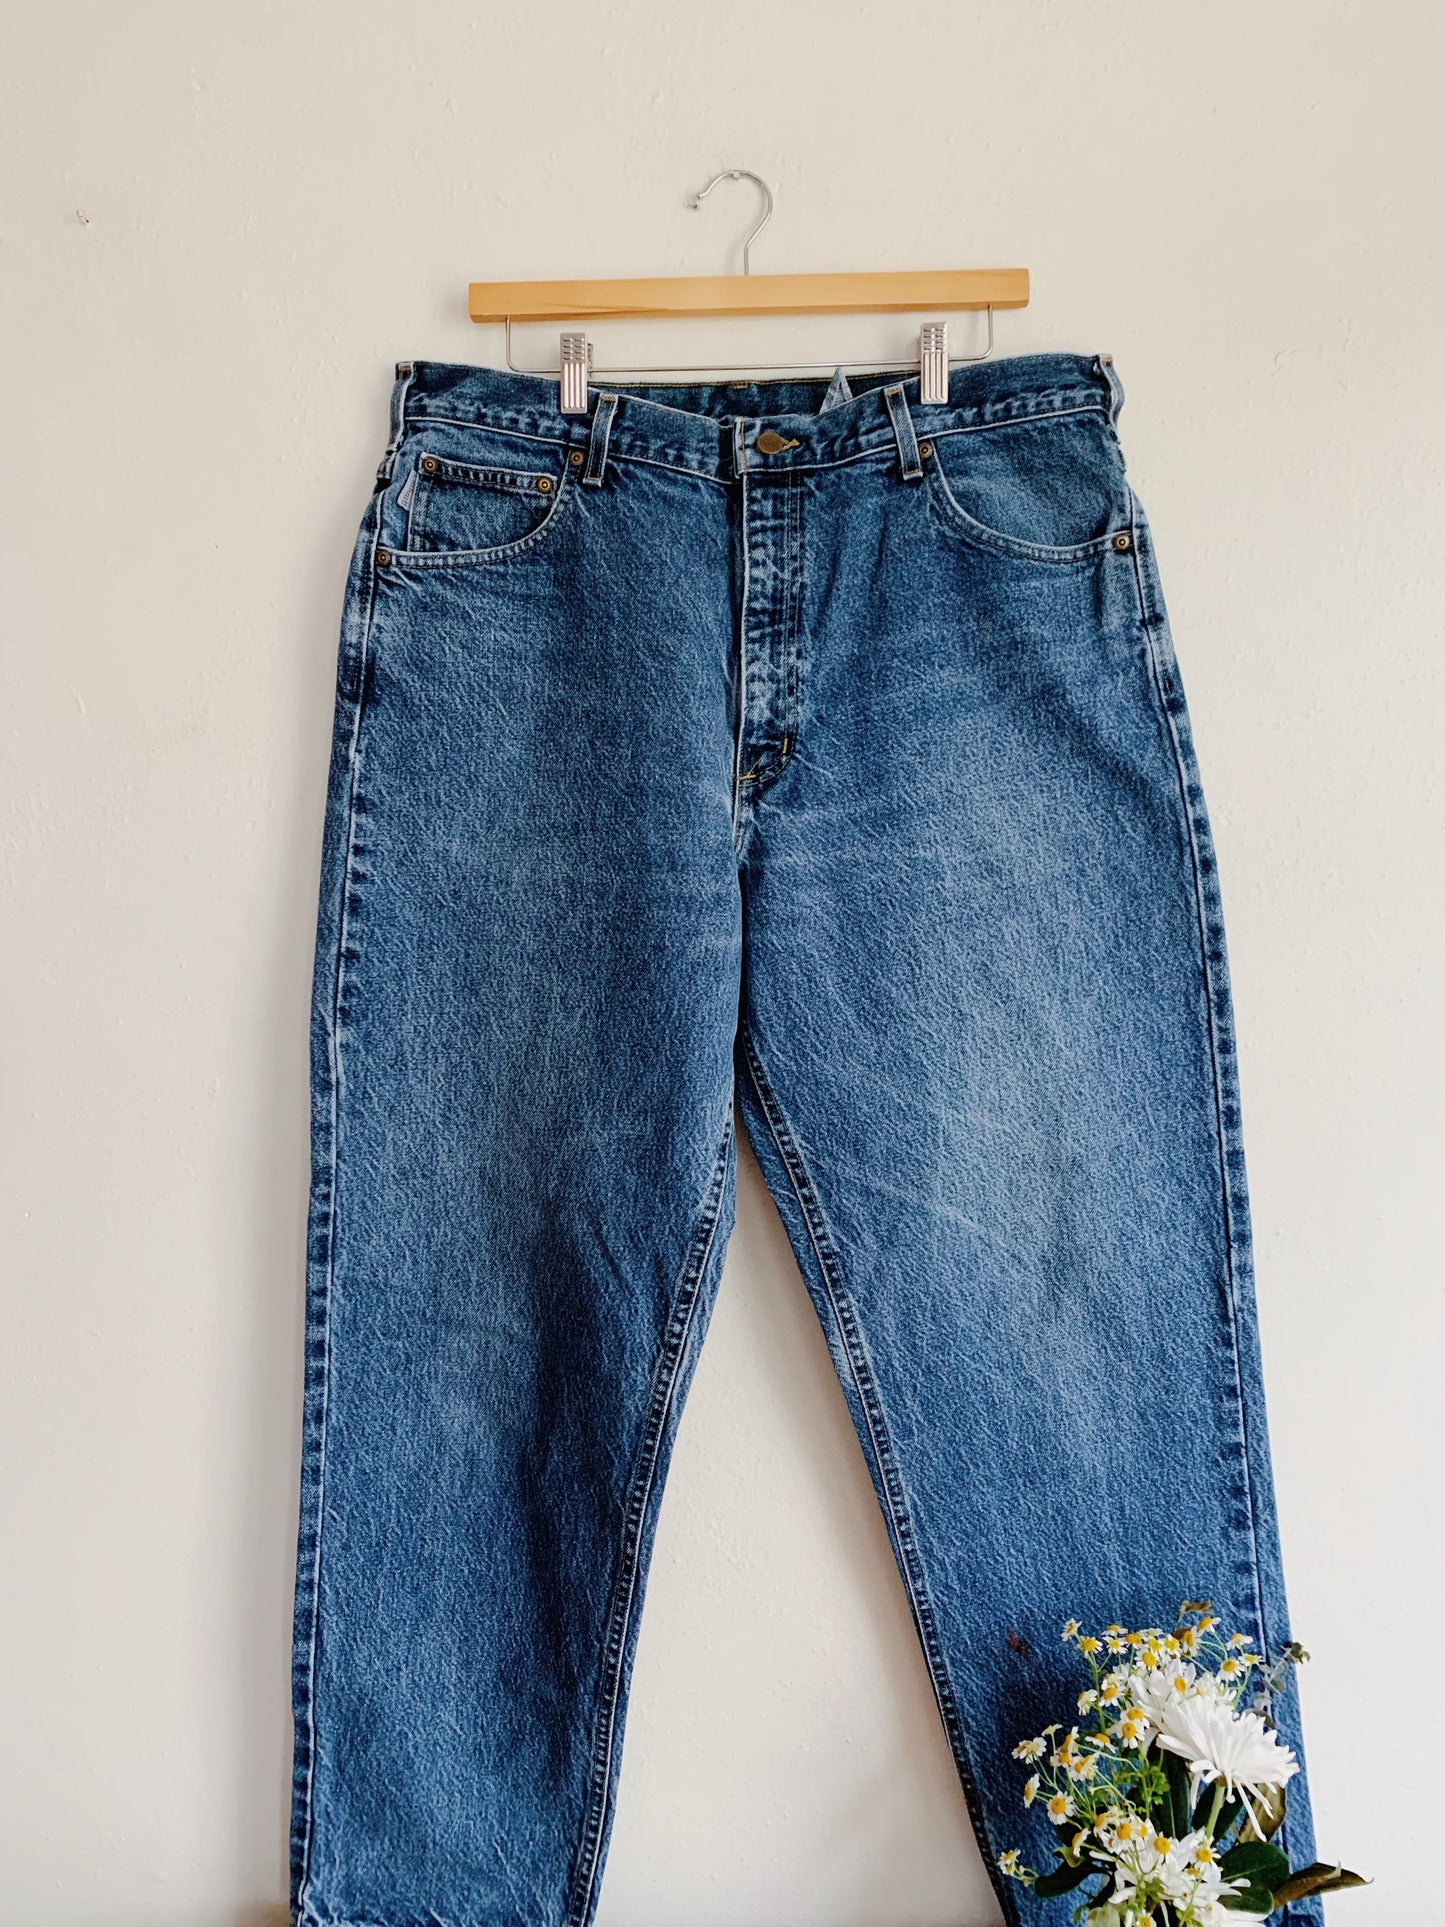 Carhartt Jeans (38x32)